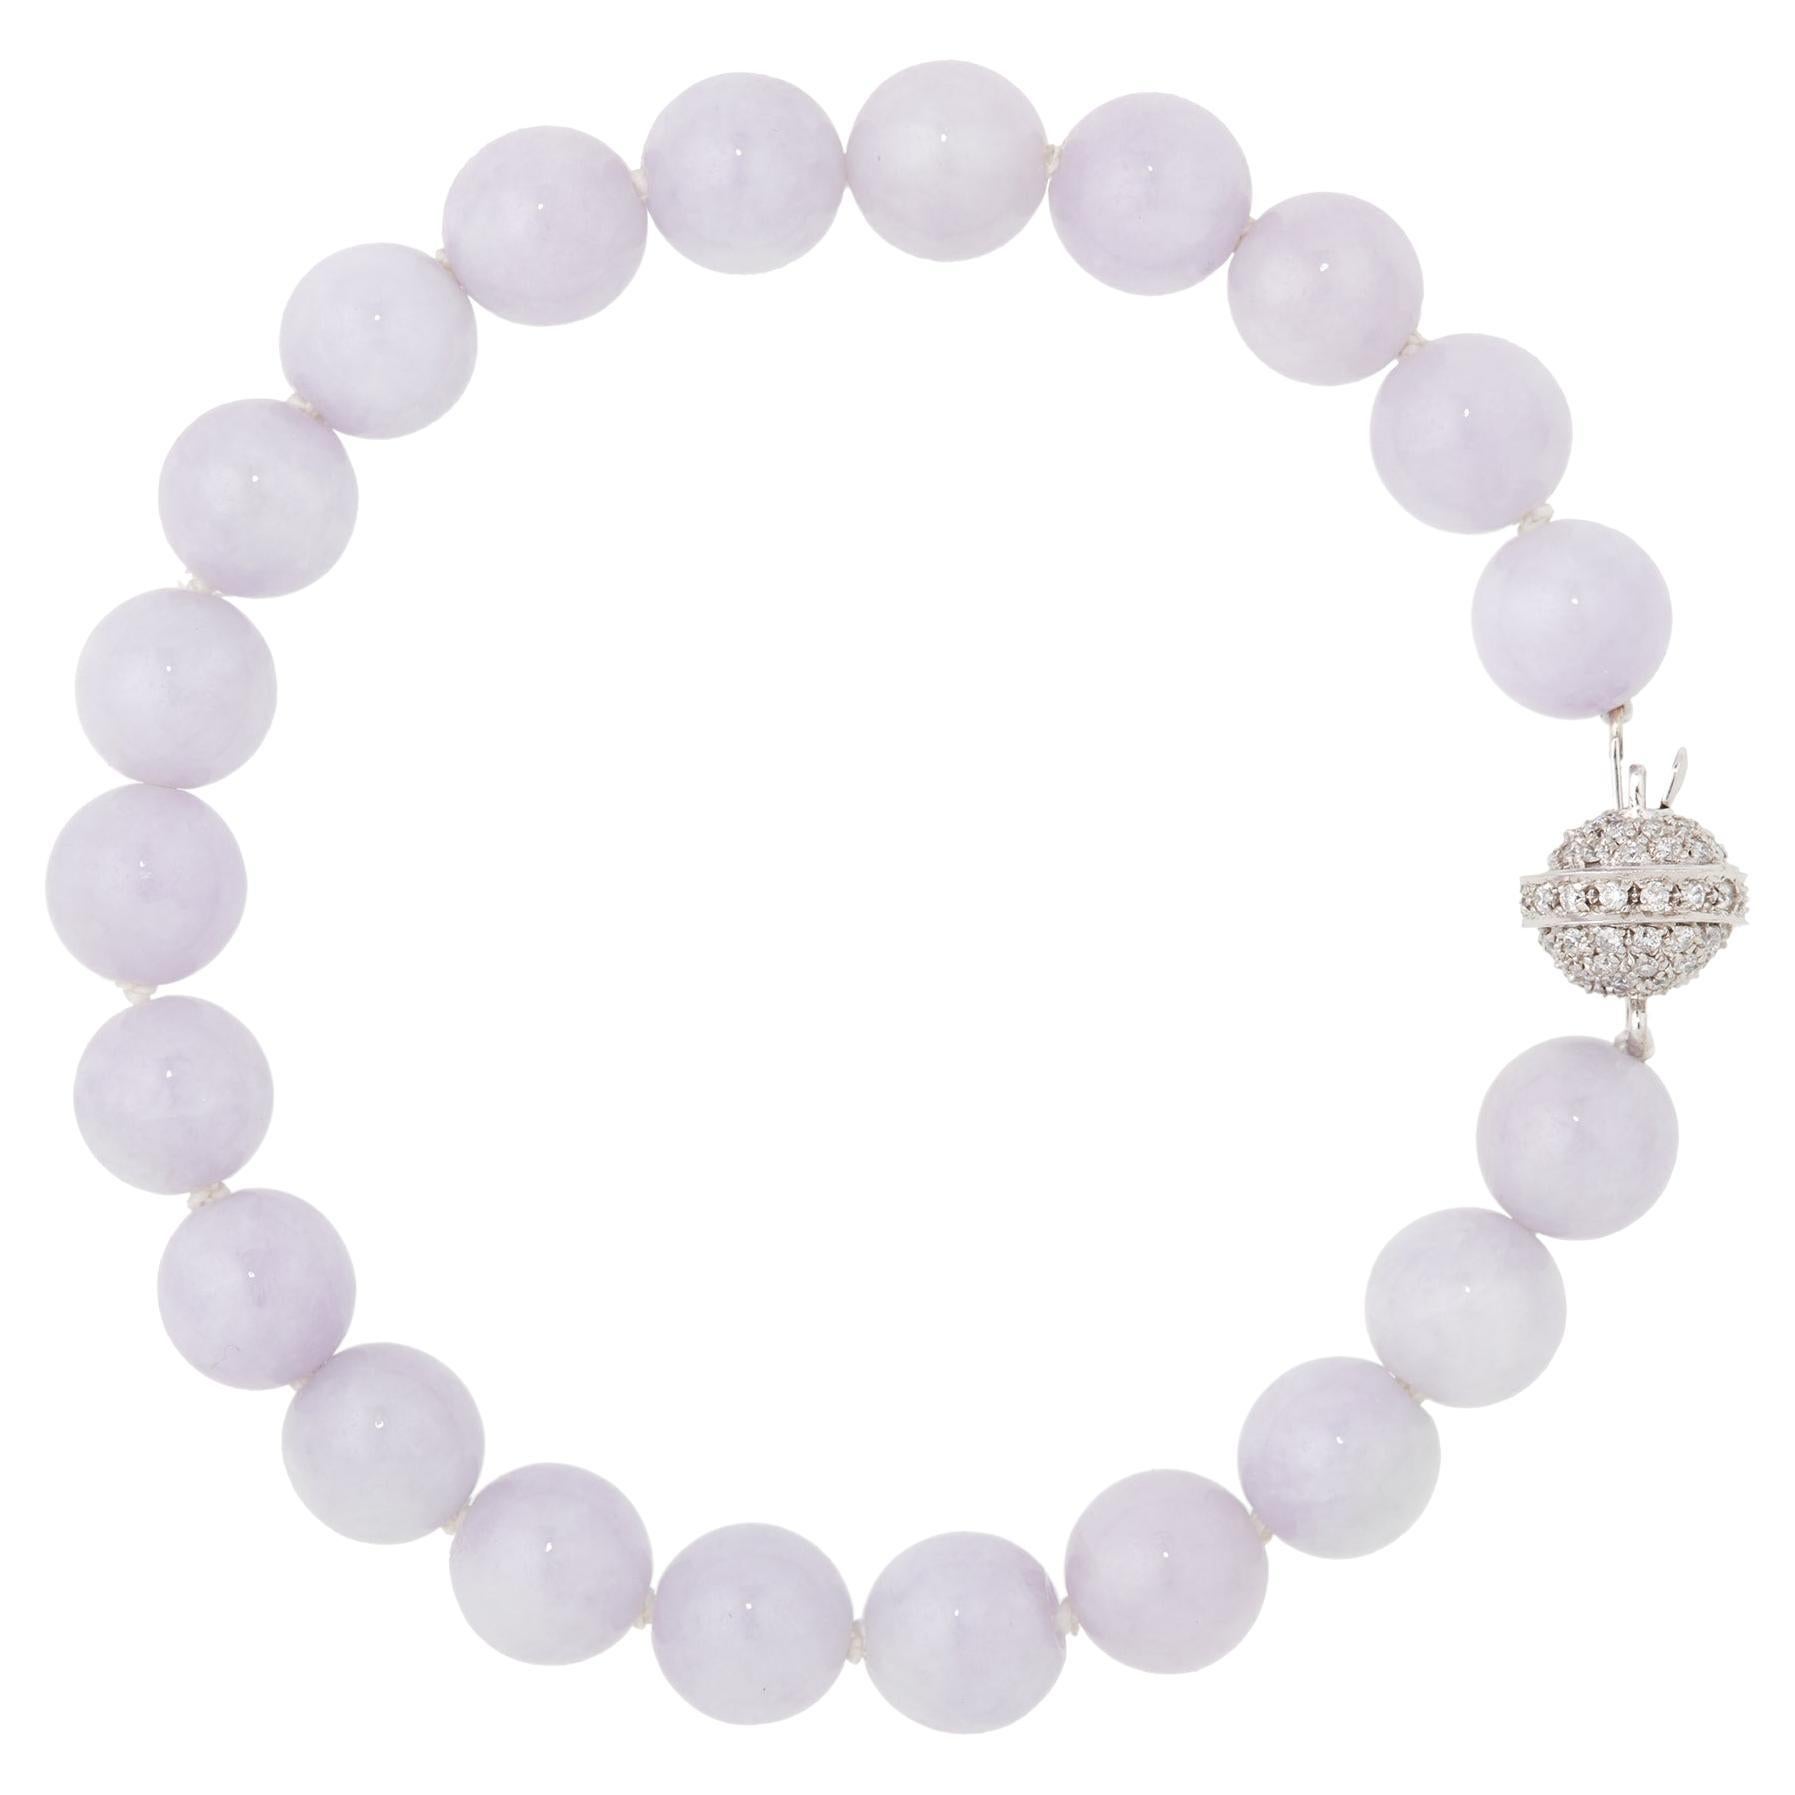 Lavender Jadeite Bracelet with 18 Karat White Gold & 0.56 Carat Diamond Clasp For Sale